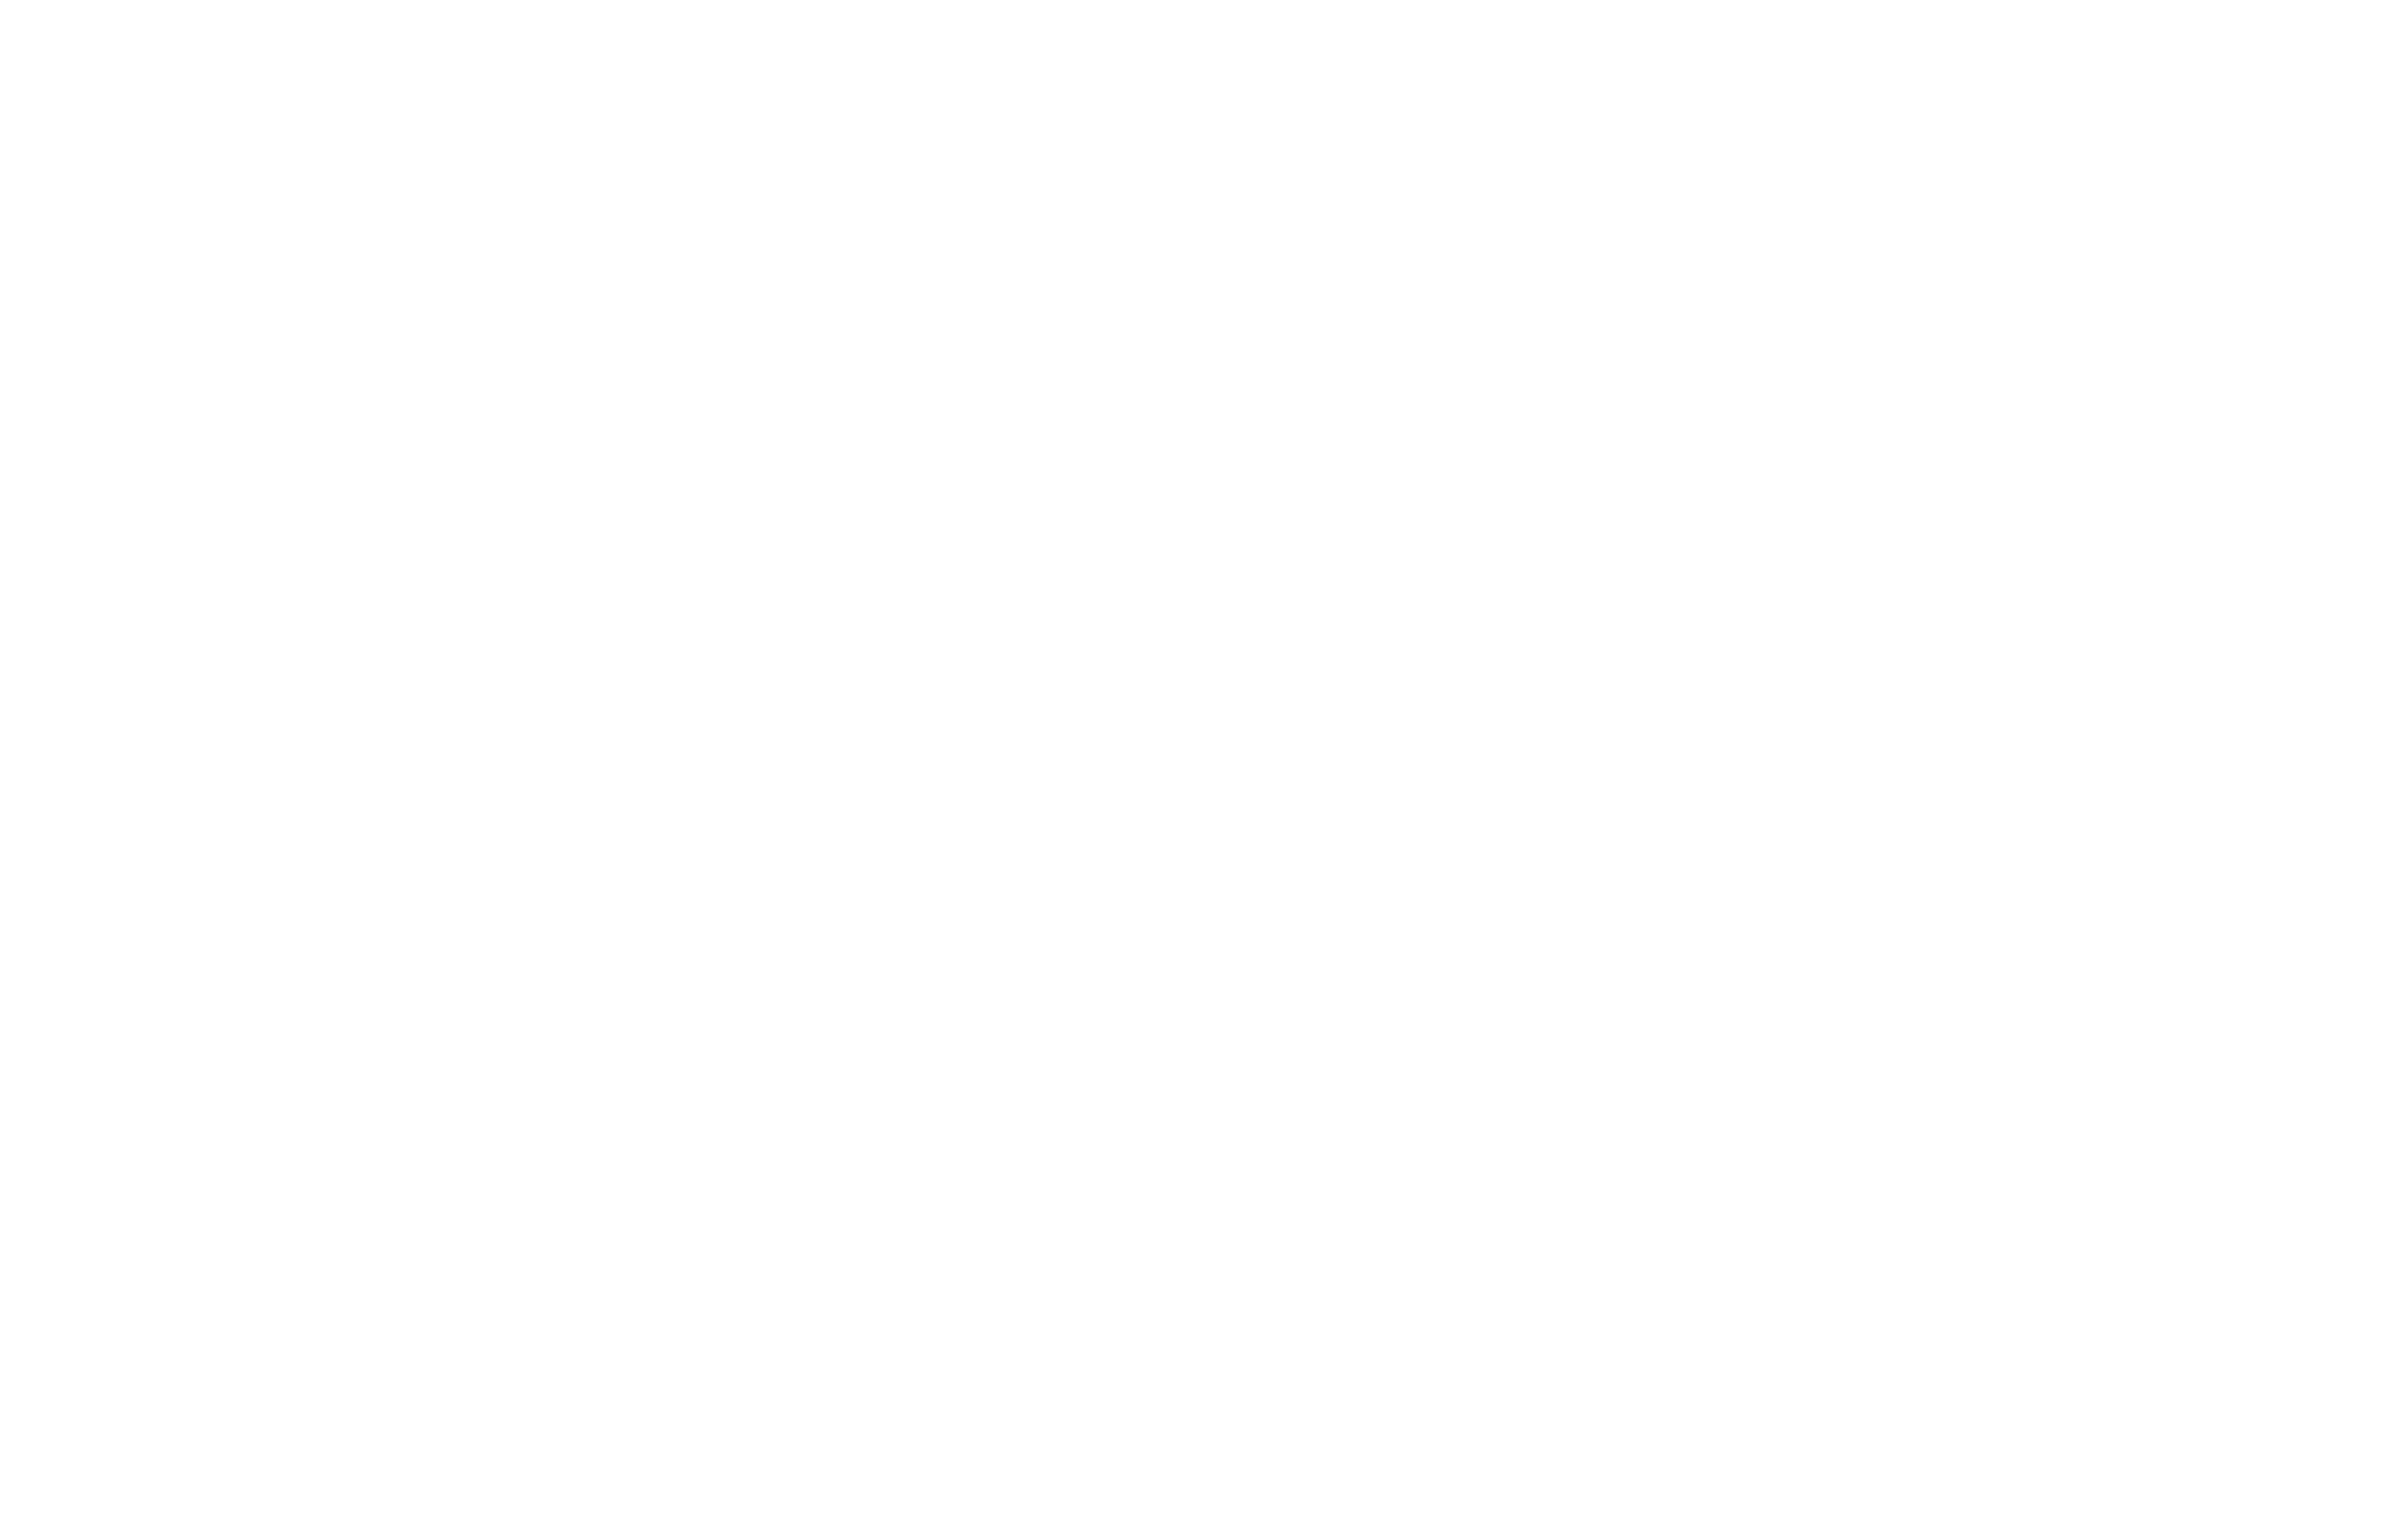 Forbes Award